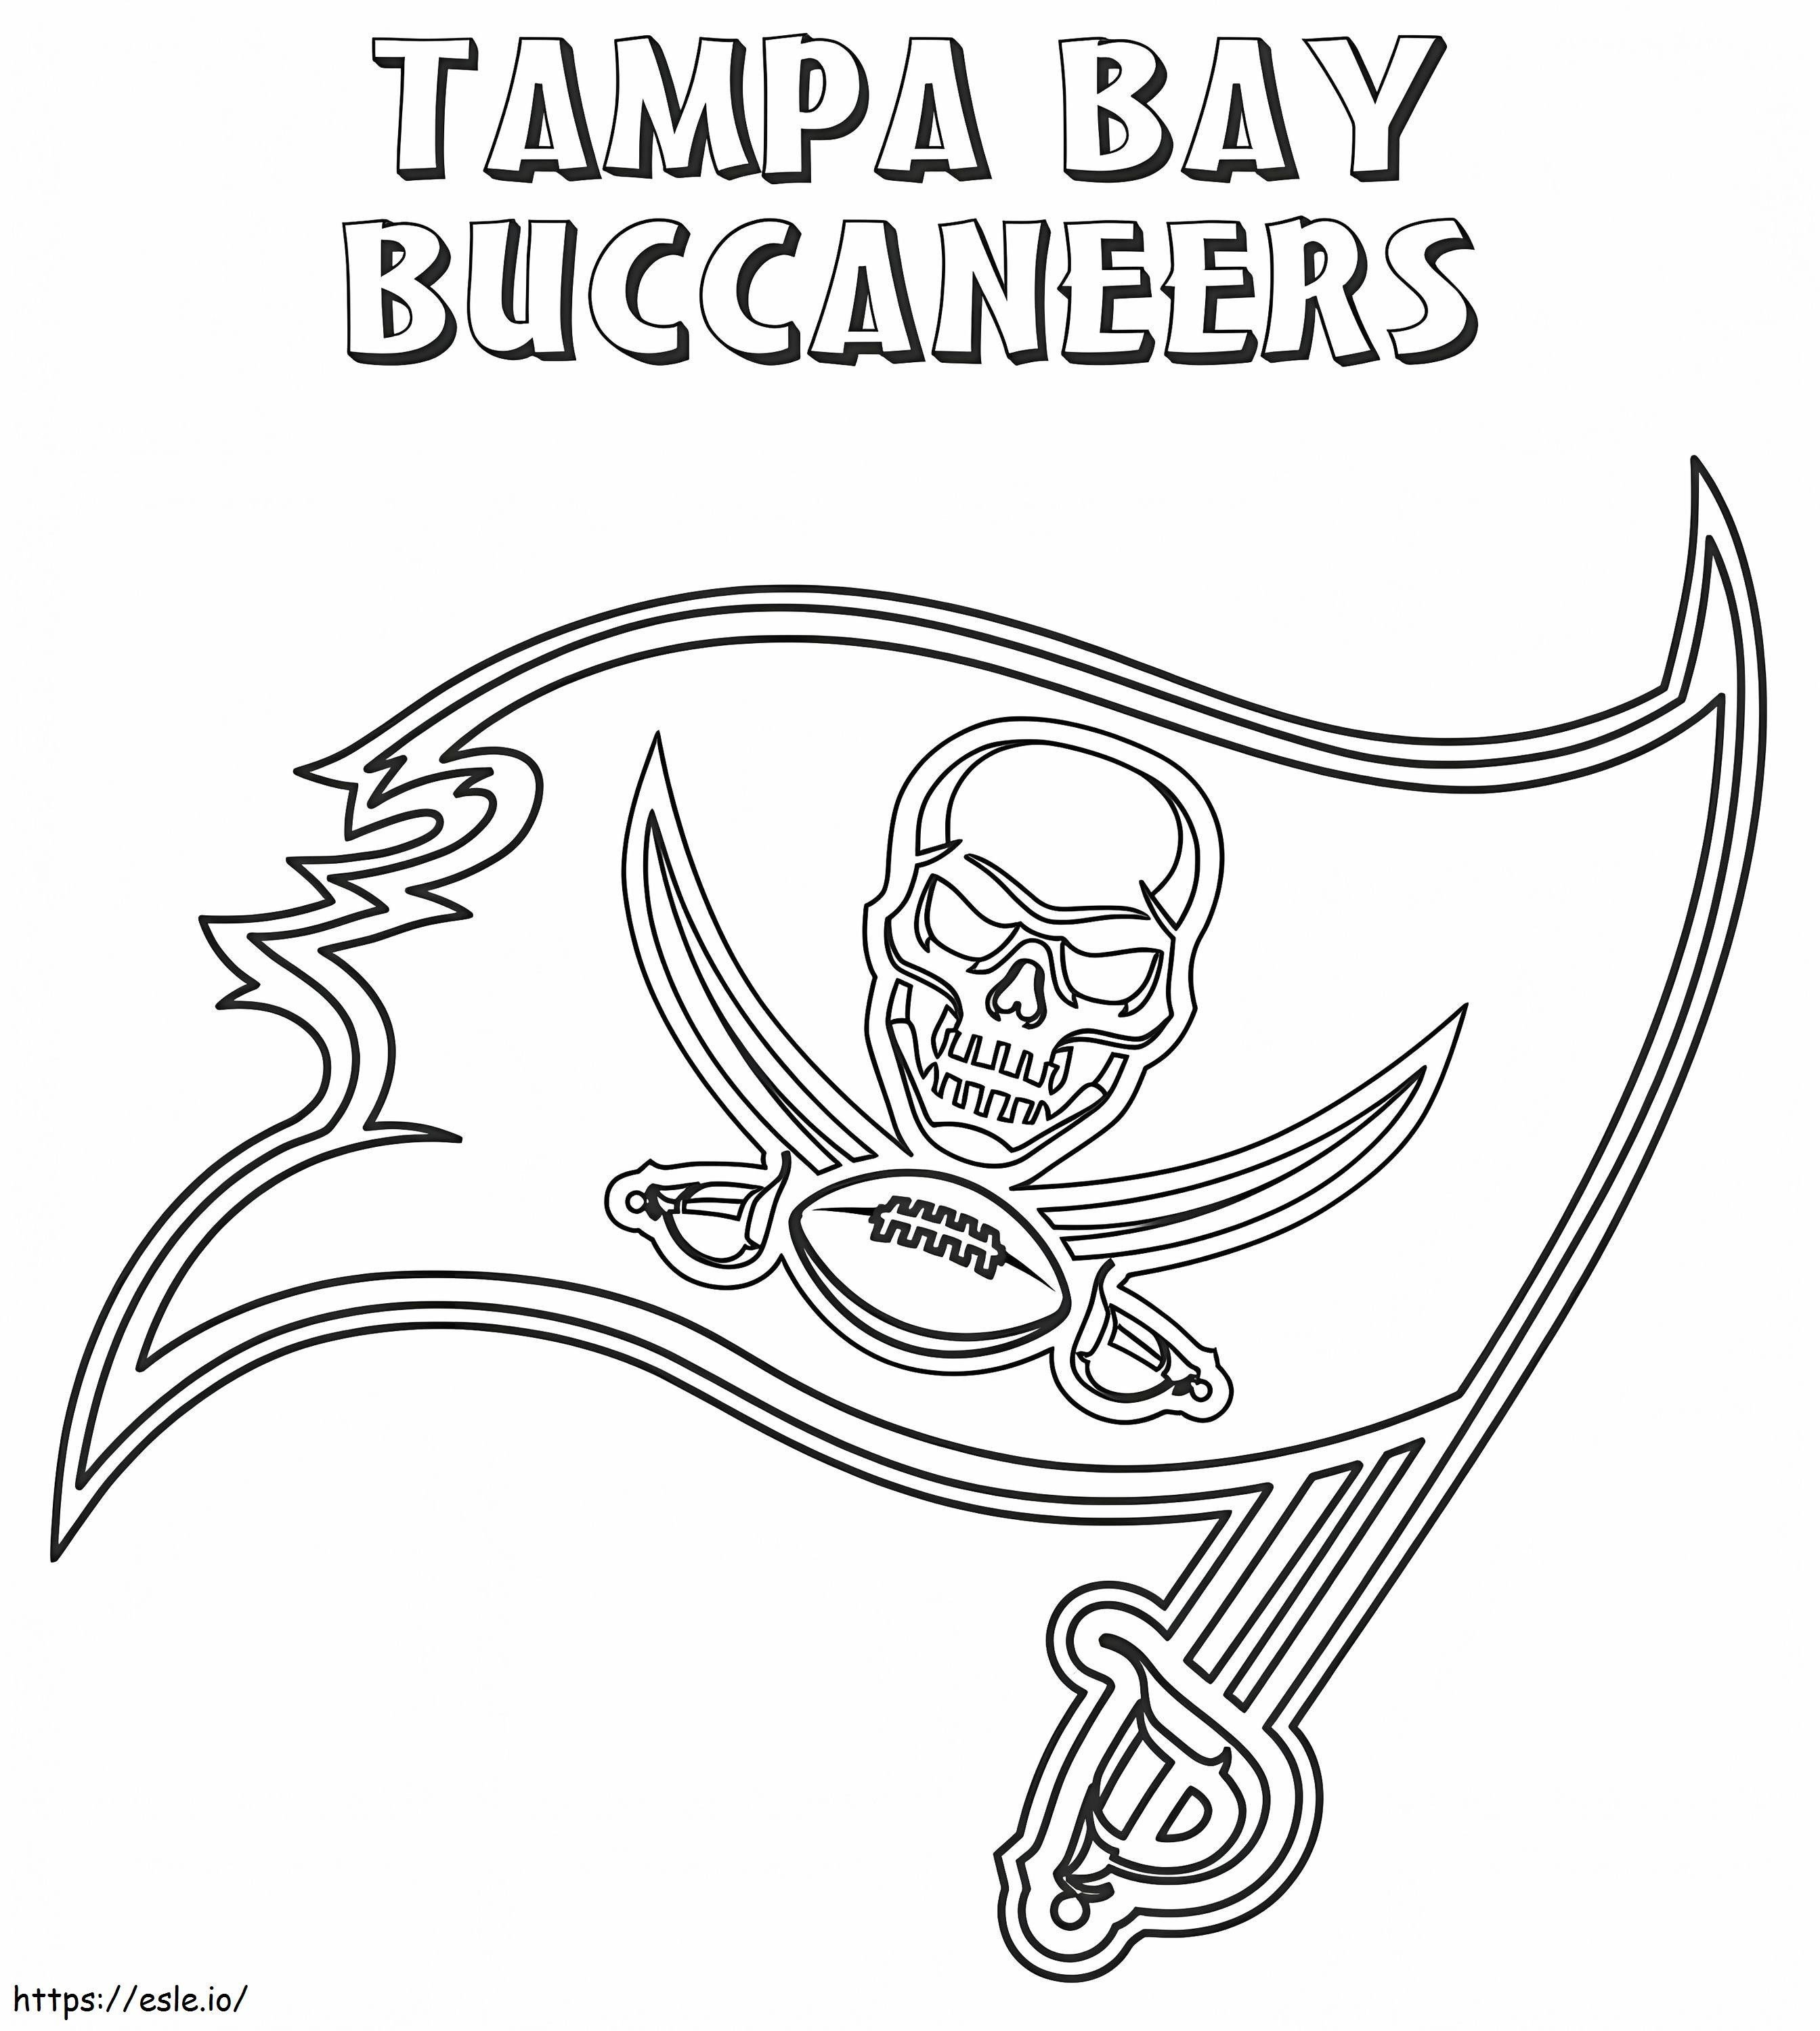 Printable Tampa Bay Buccaneers coloring page